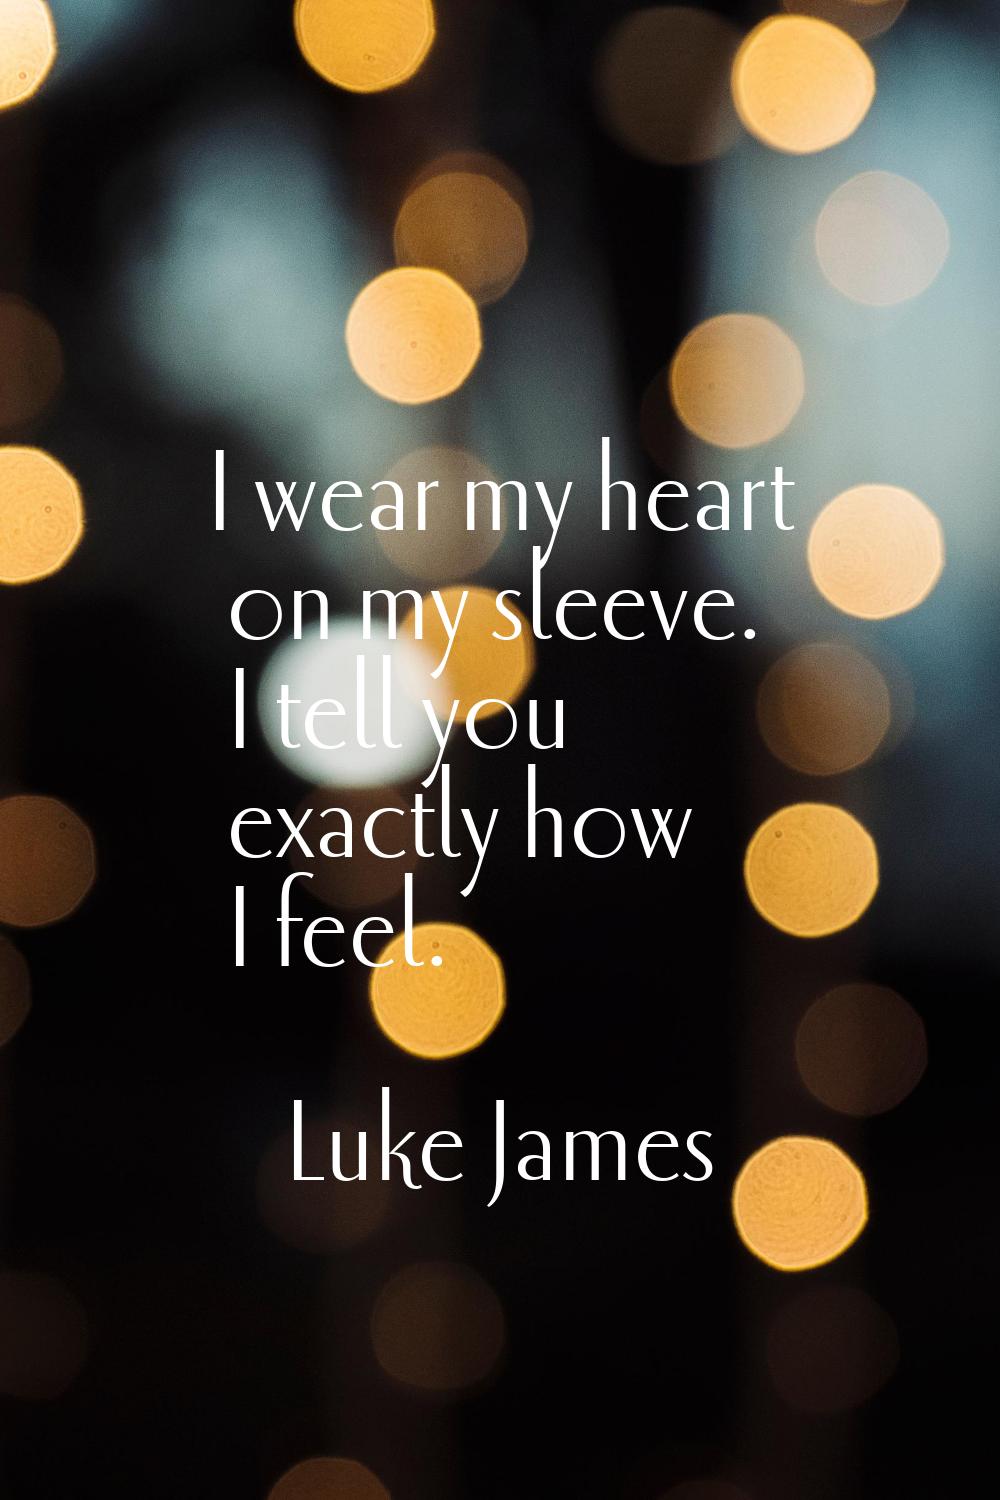 I wear my heart on my sleeve. I tell you exactly how I feel.